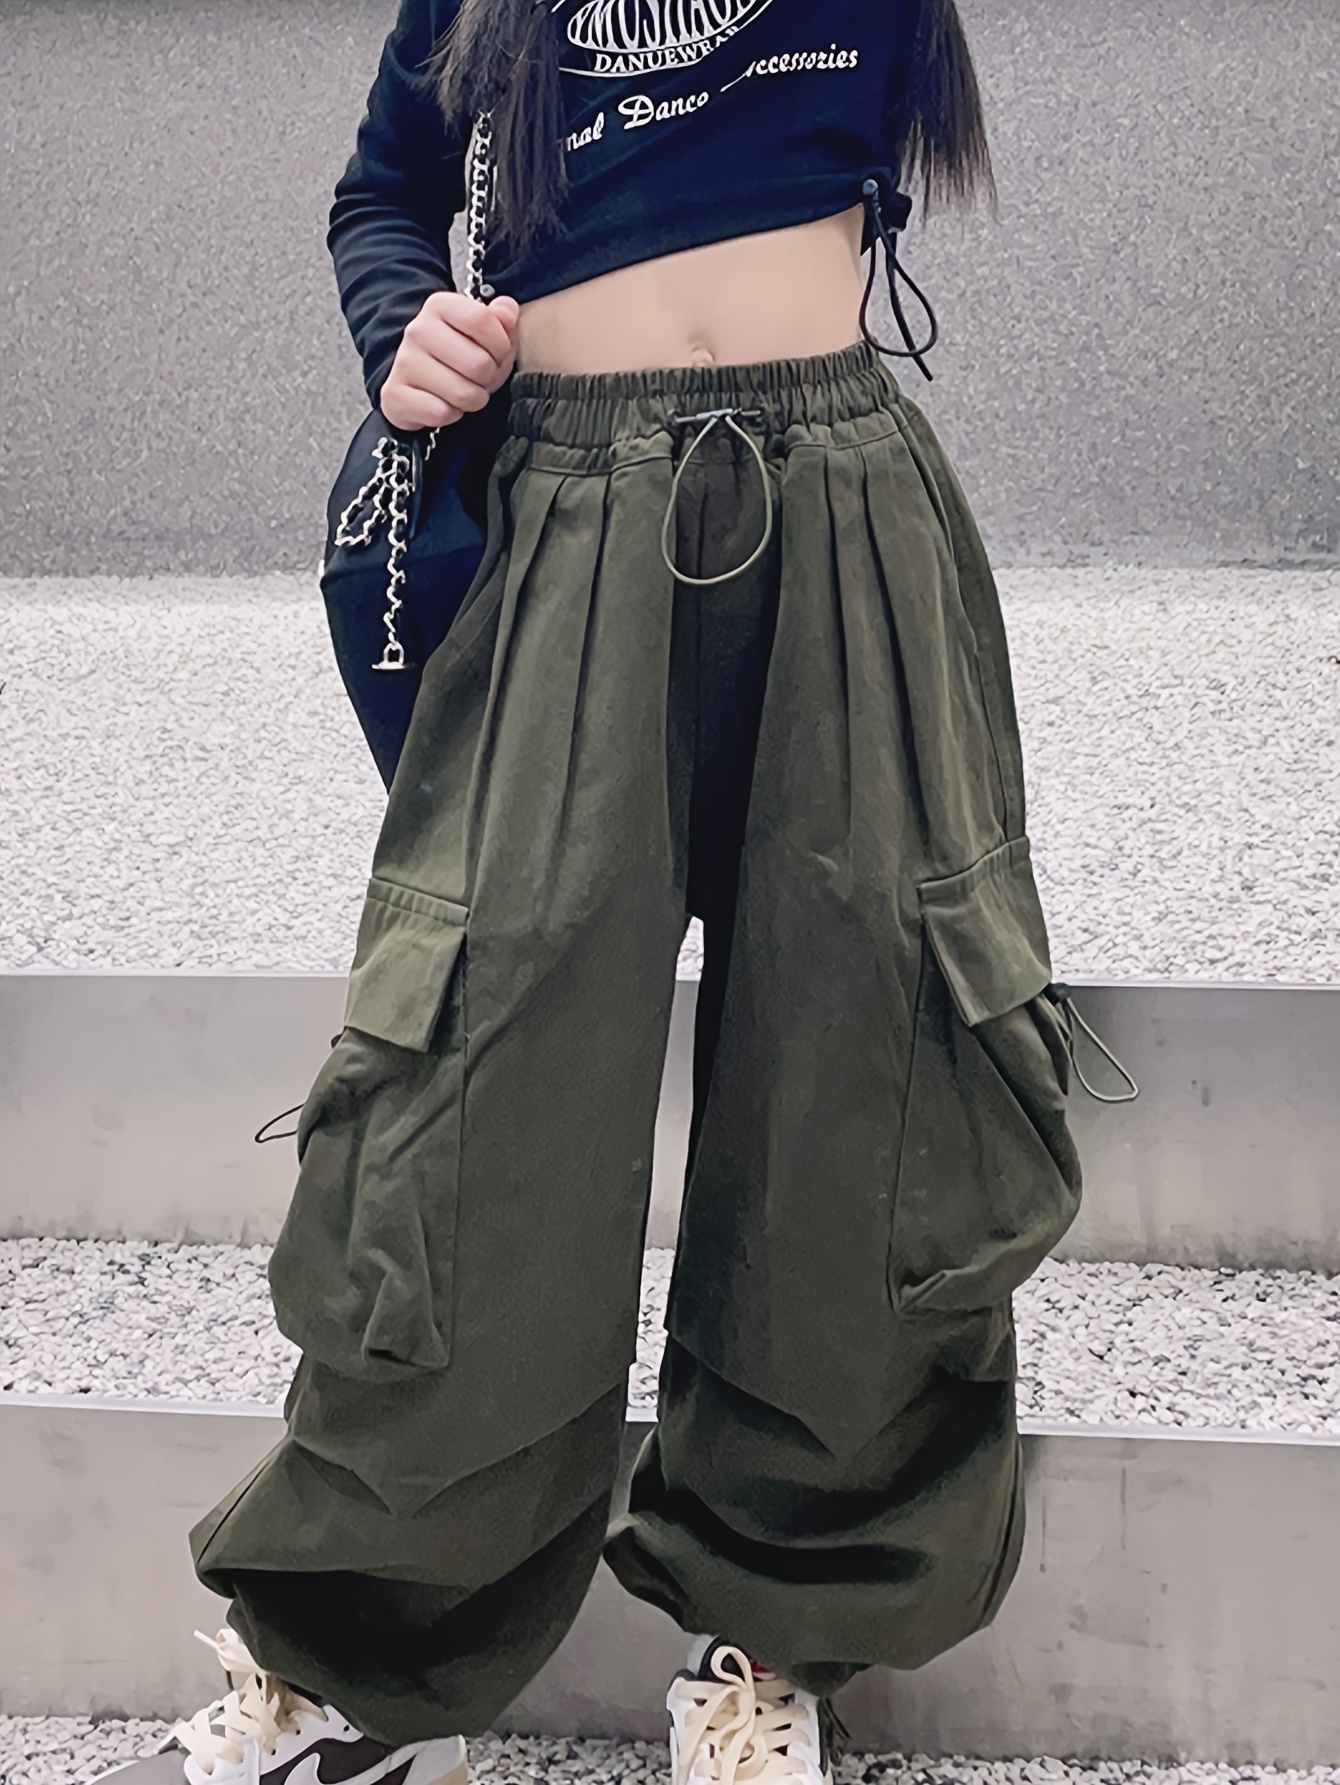 Akiihool Teen Girl Pants Trendy Girls Stretch Cargo Twill Skinny